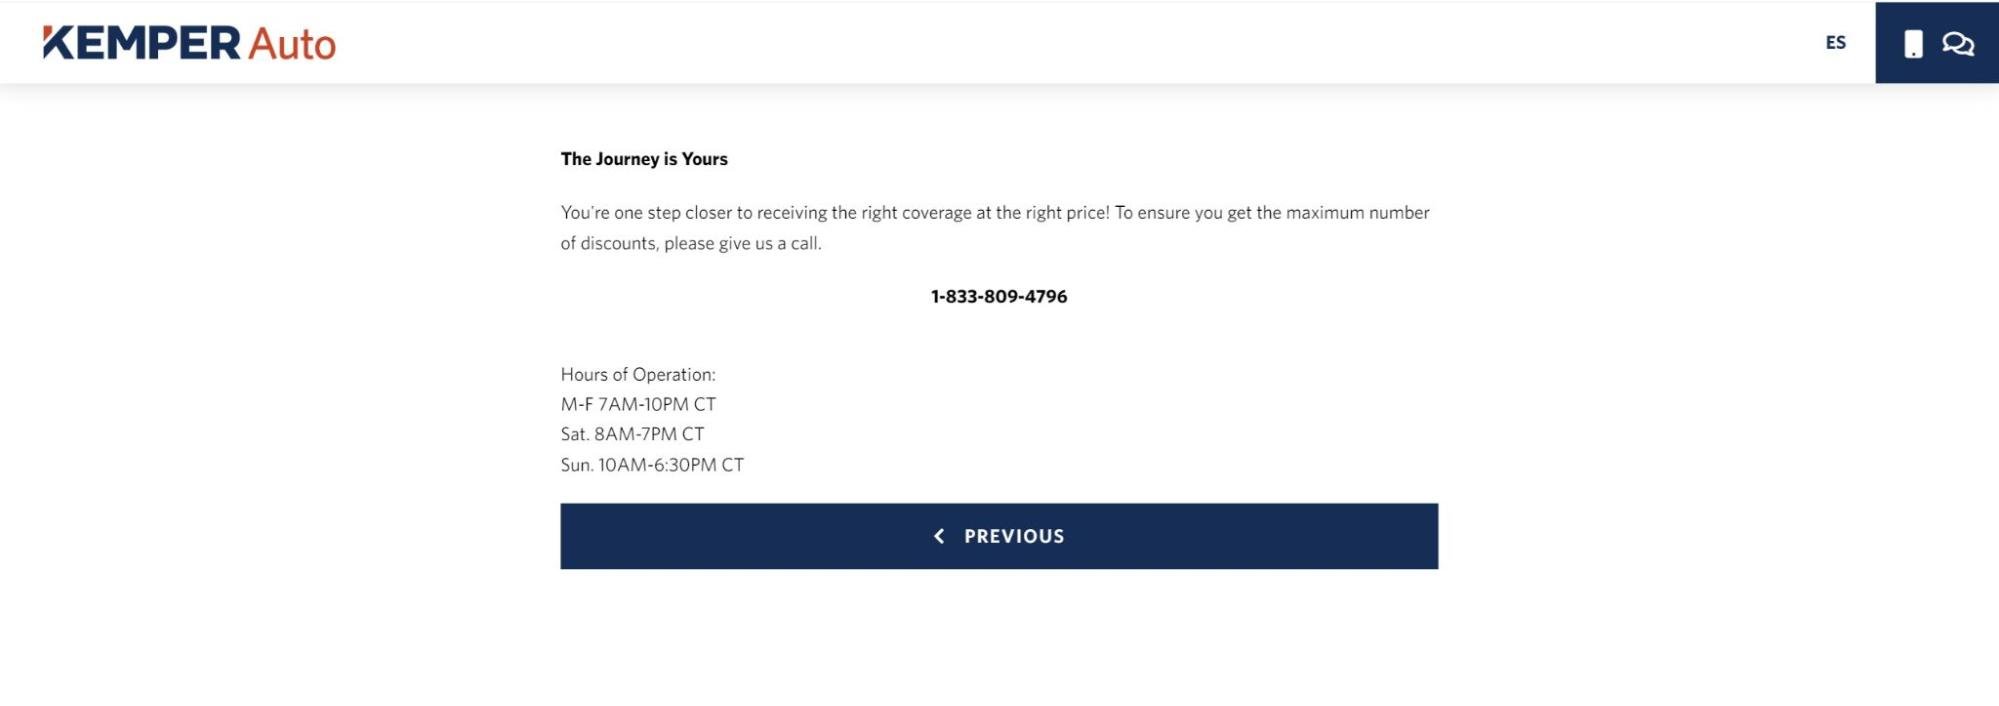 Kemper Auto customer service contact info page